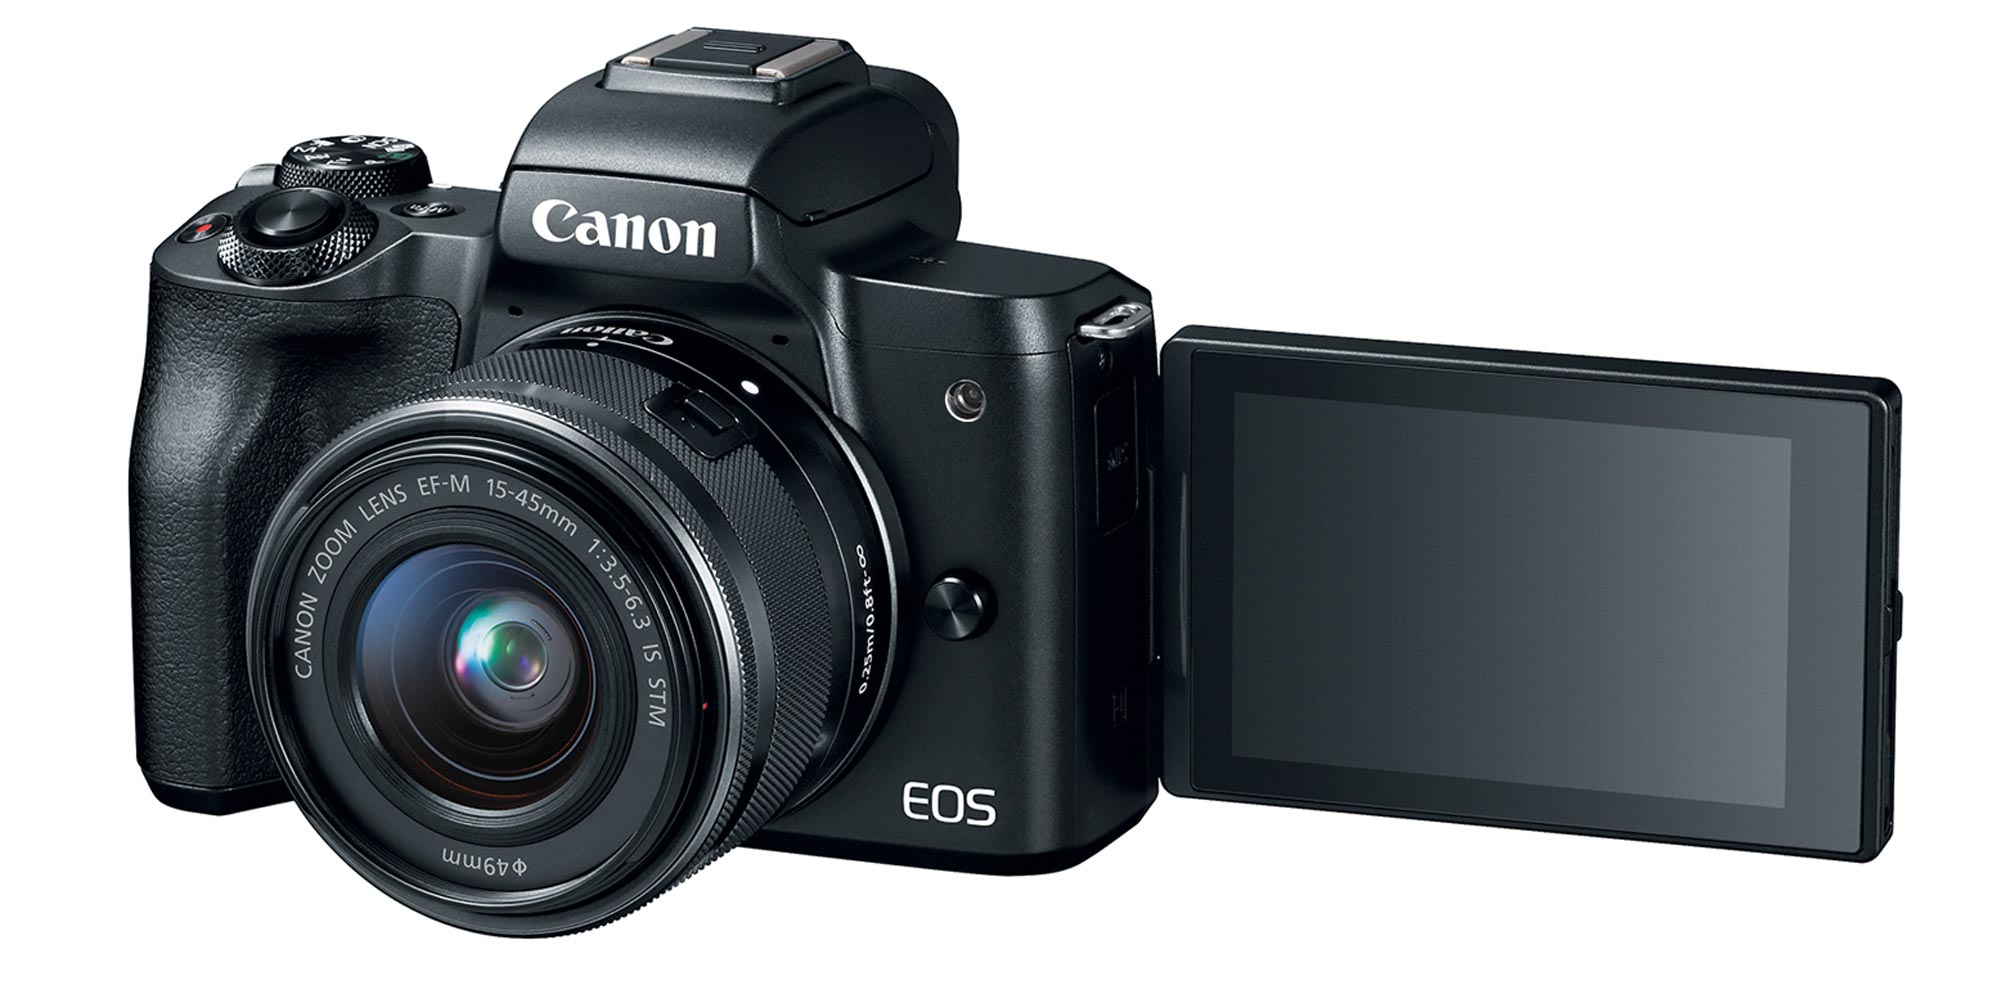 til stede Betsy Trotwood sammenhængende Canon EOS M50 captures summer memories in 4K + works as a webcam at Amazon  low of $499